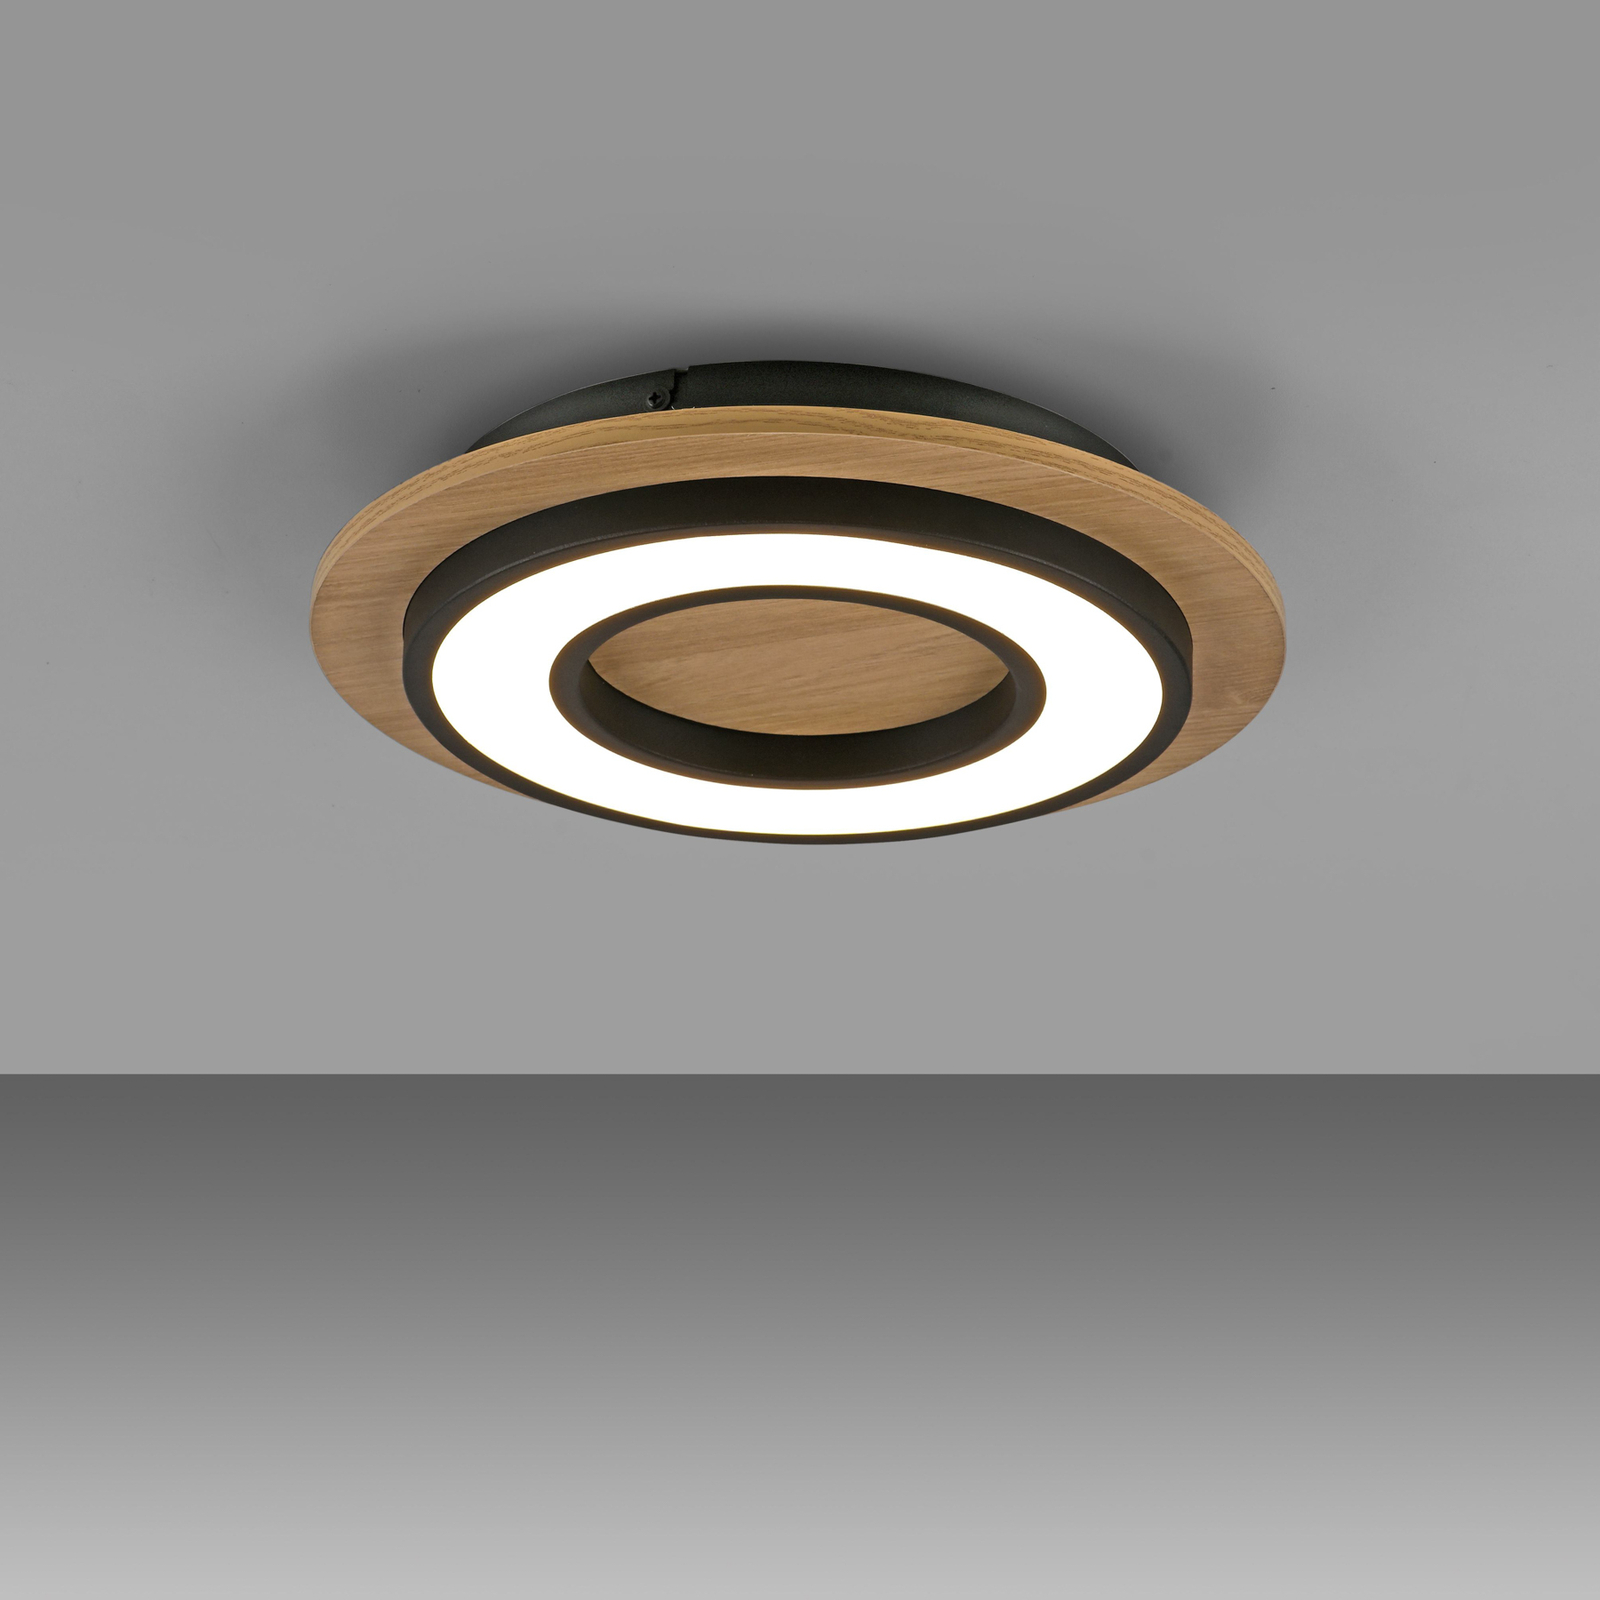 JUST LIGHT. LED ceiling light Tola, round, wood, 3,000 K